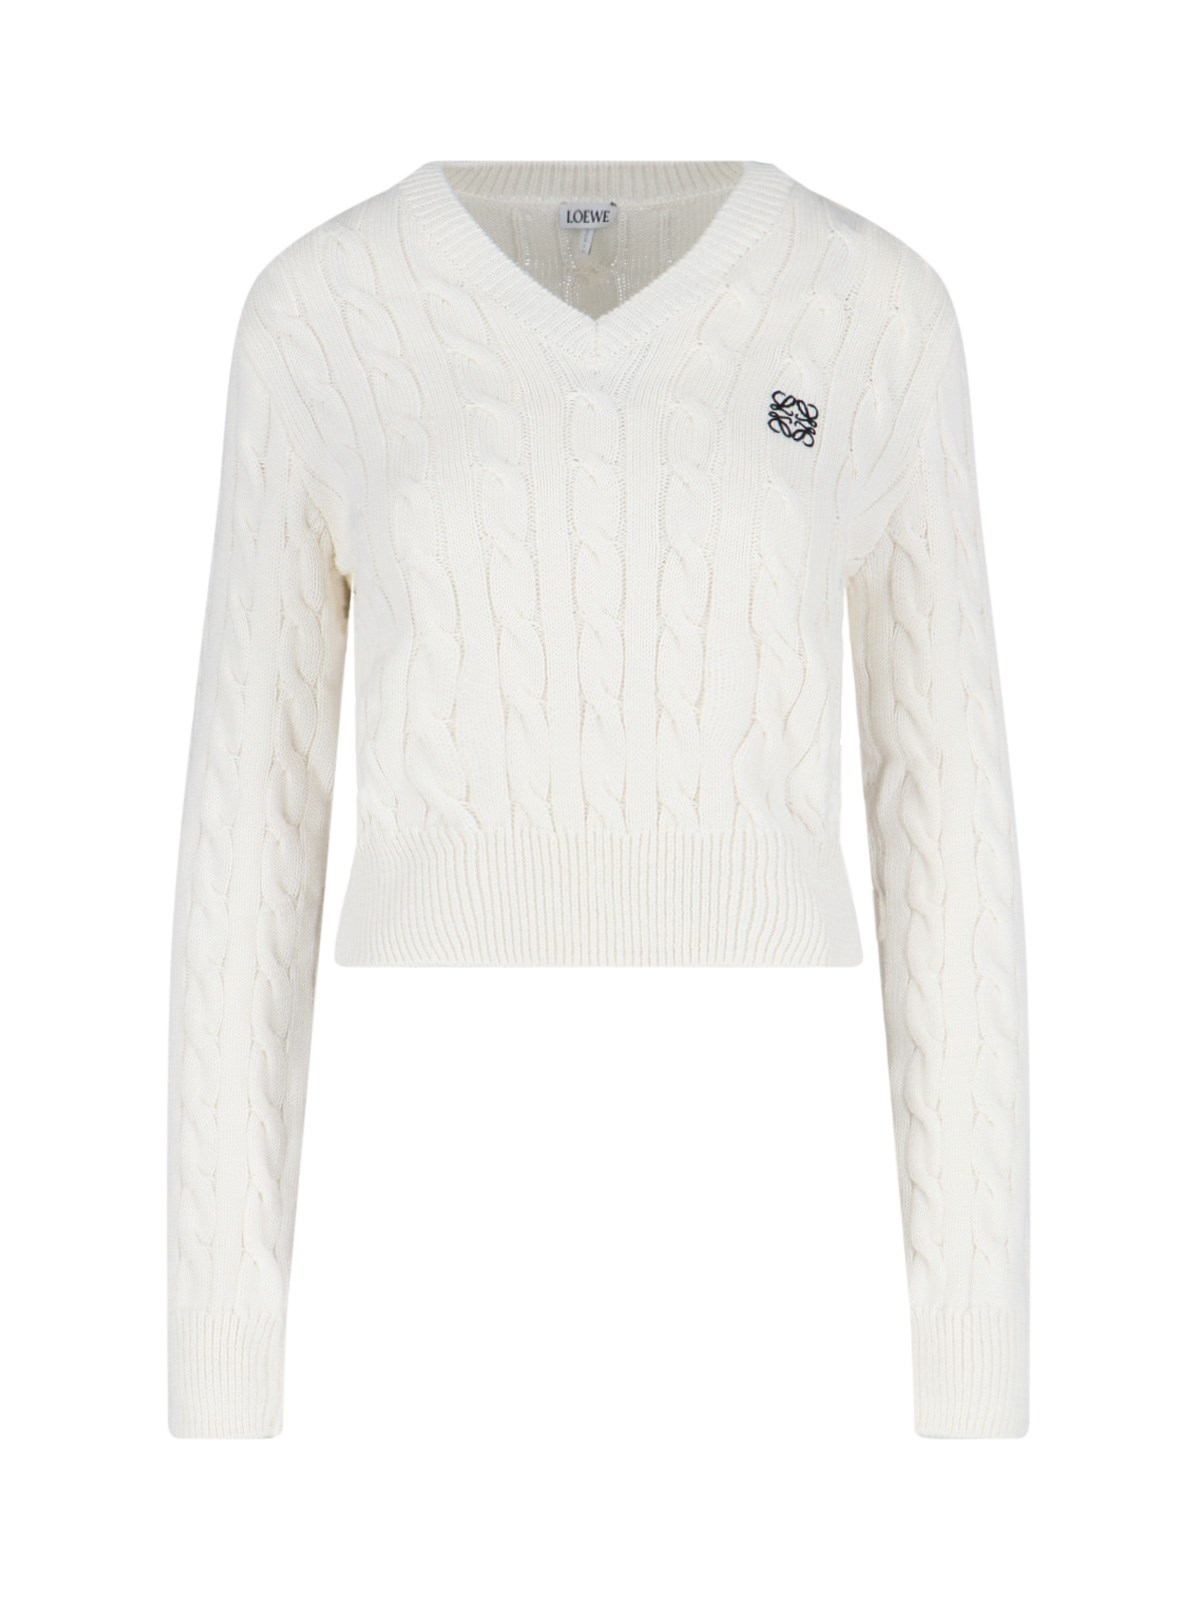 Loewe Logo Crop Sweater In White